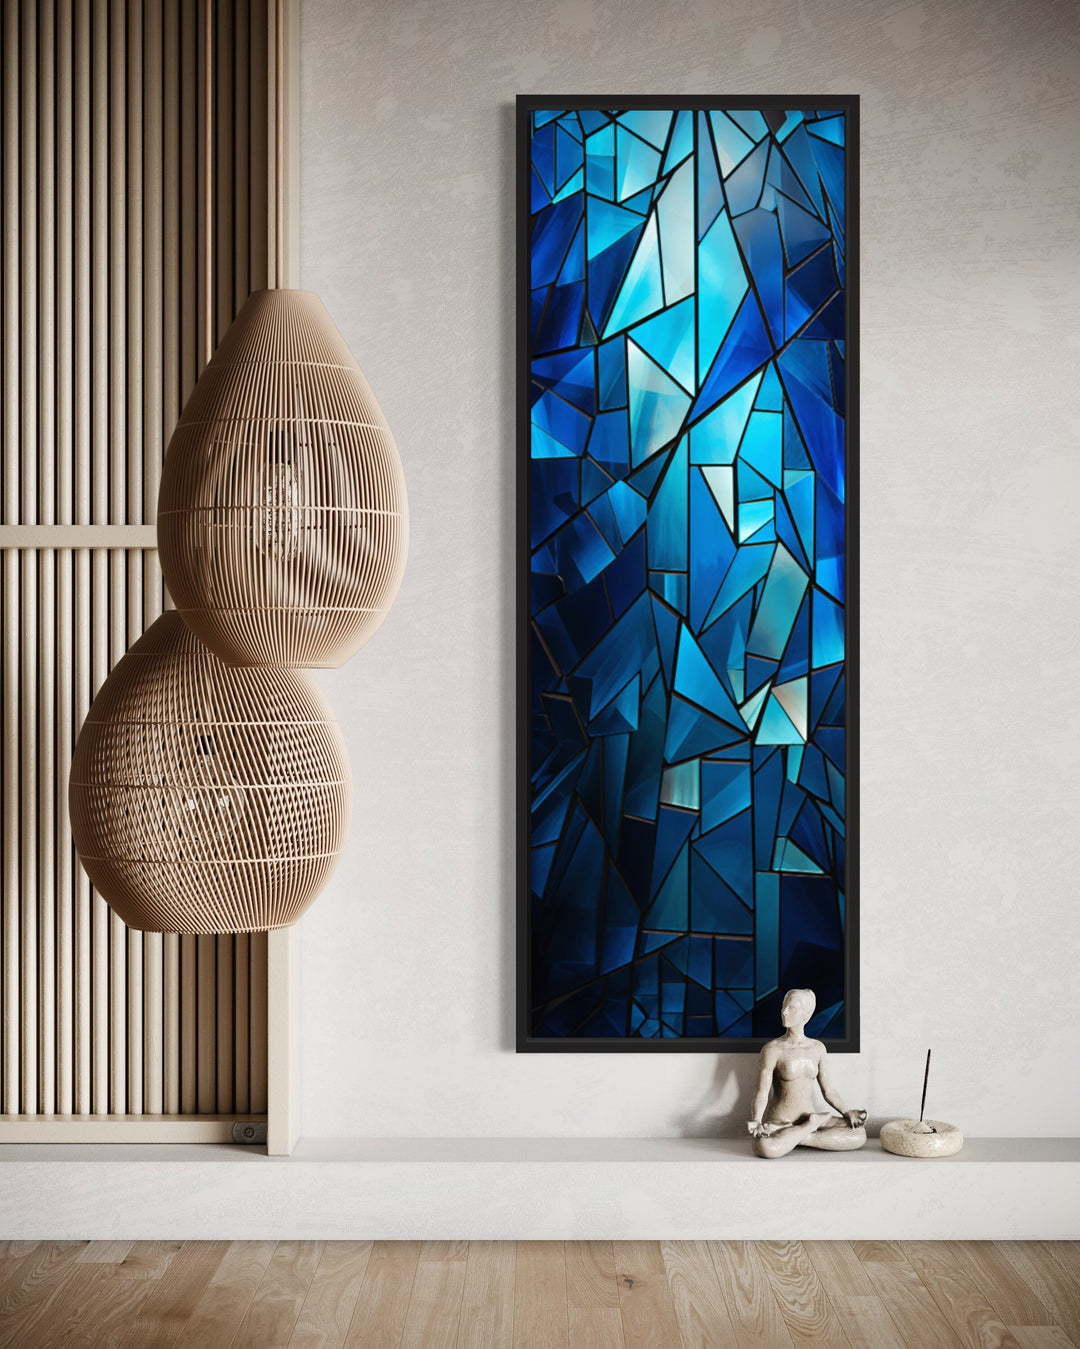 Long Narrow Navy Blue Kaleidoscope Mosaic Abstract Vertical Wall Art close up view